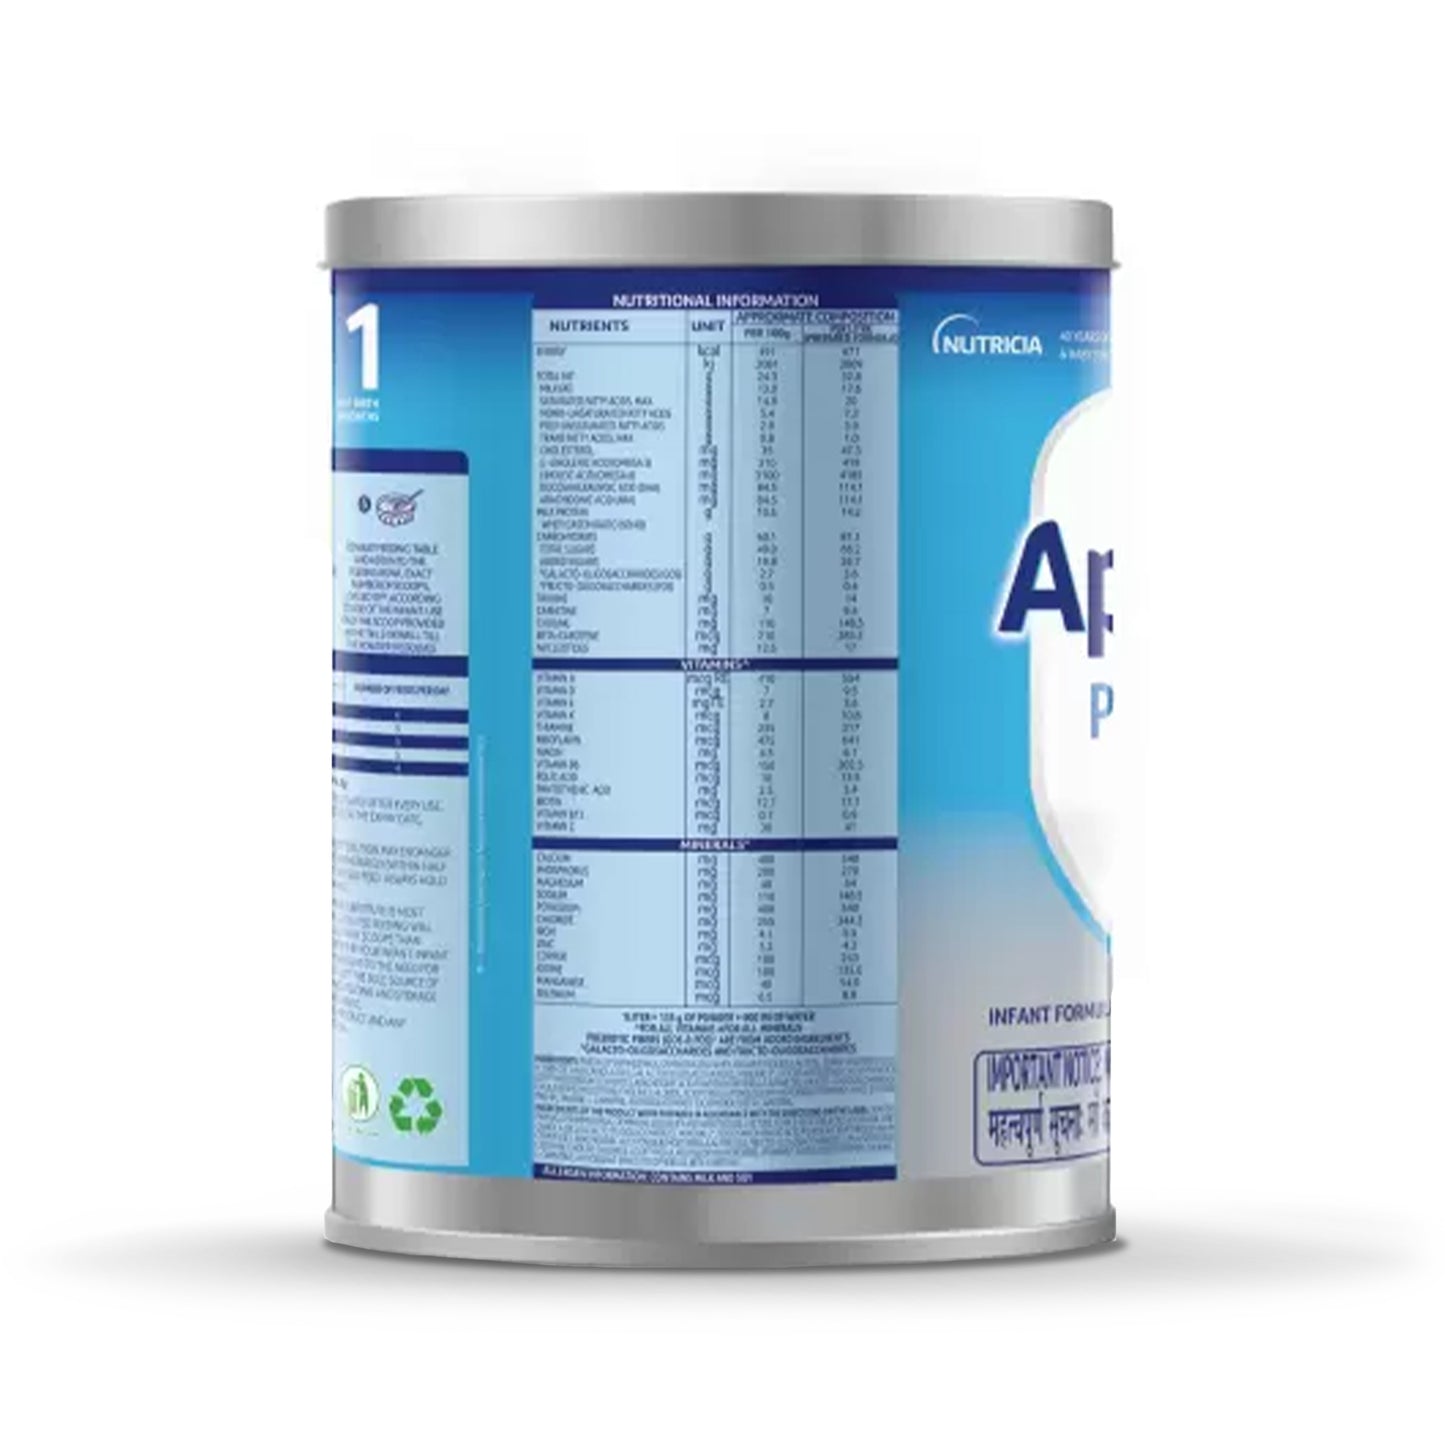 Aptamil Premium 1 Infant Formula From Birth to 6 Months - Tin, 400gm